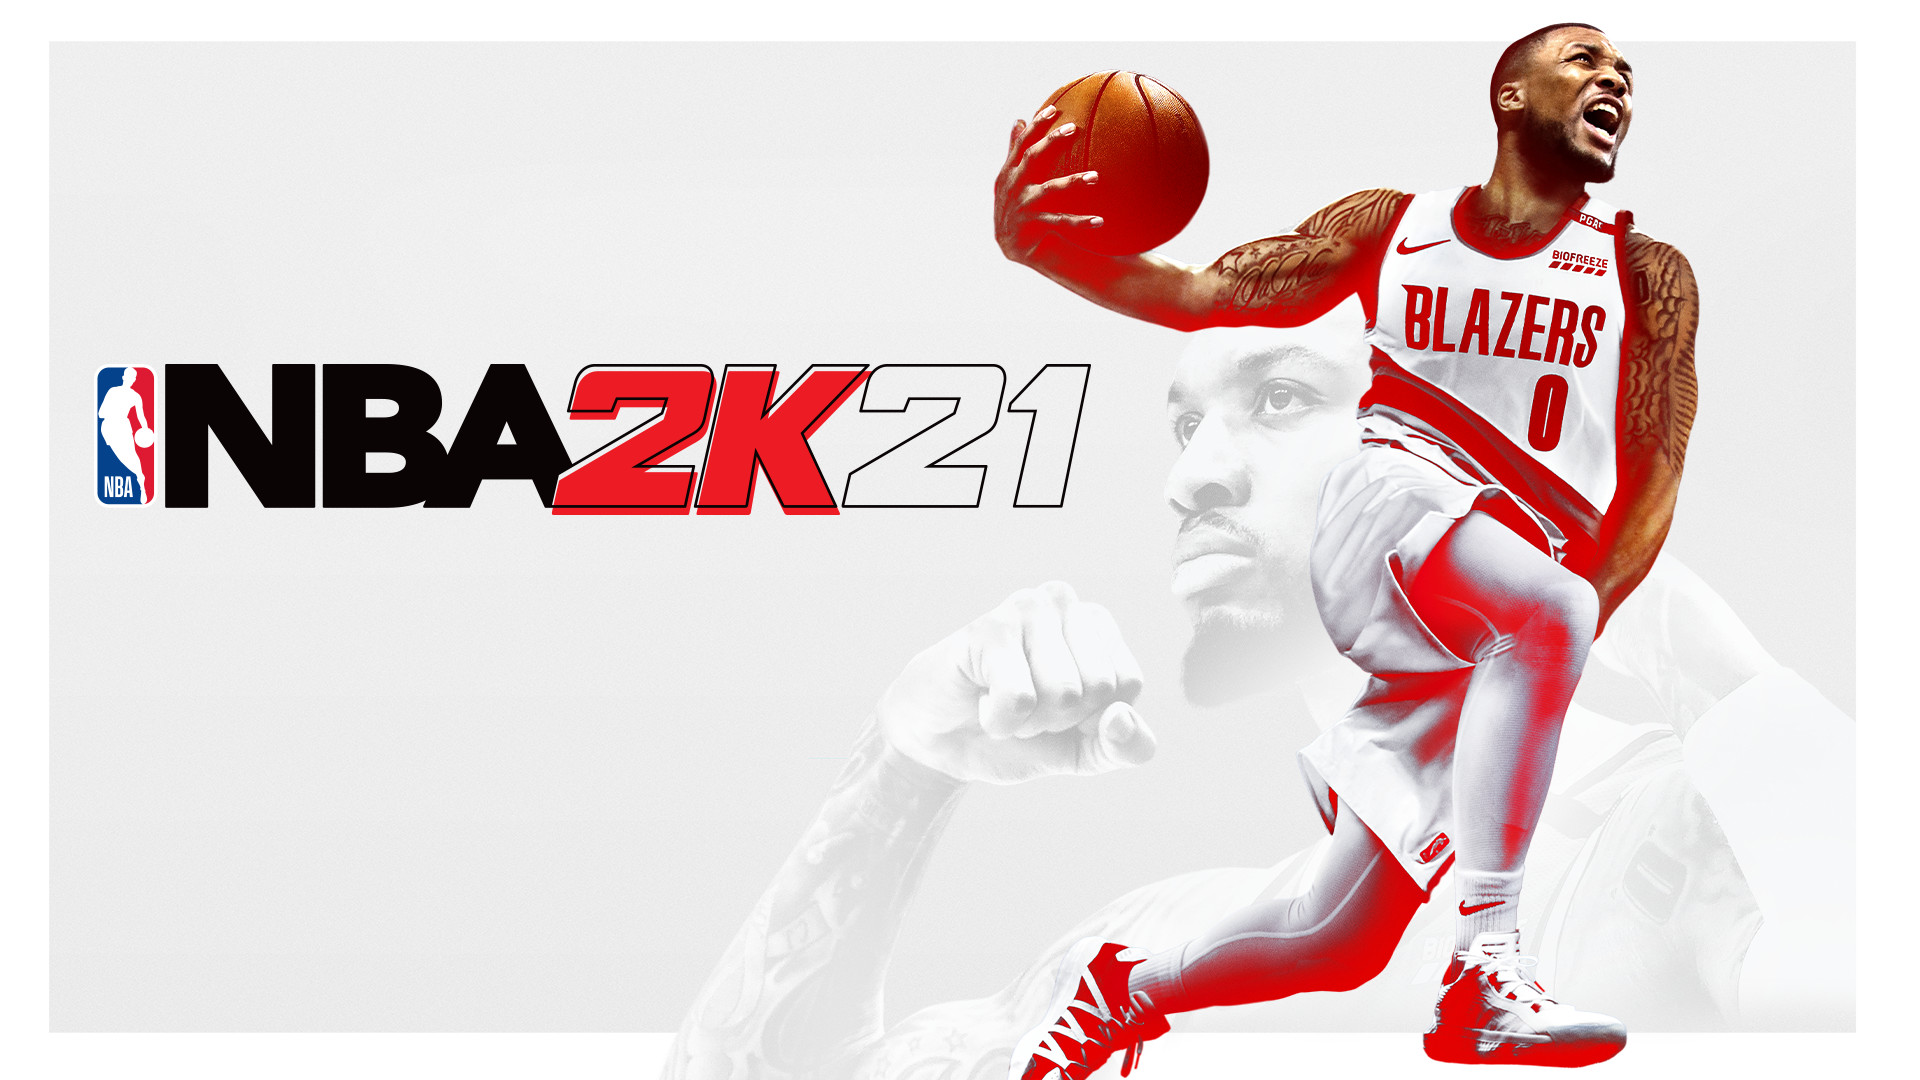 《NBA 2K21》Steam預購開啟 標準版售價199元